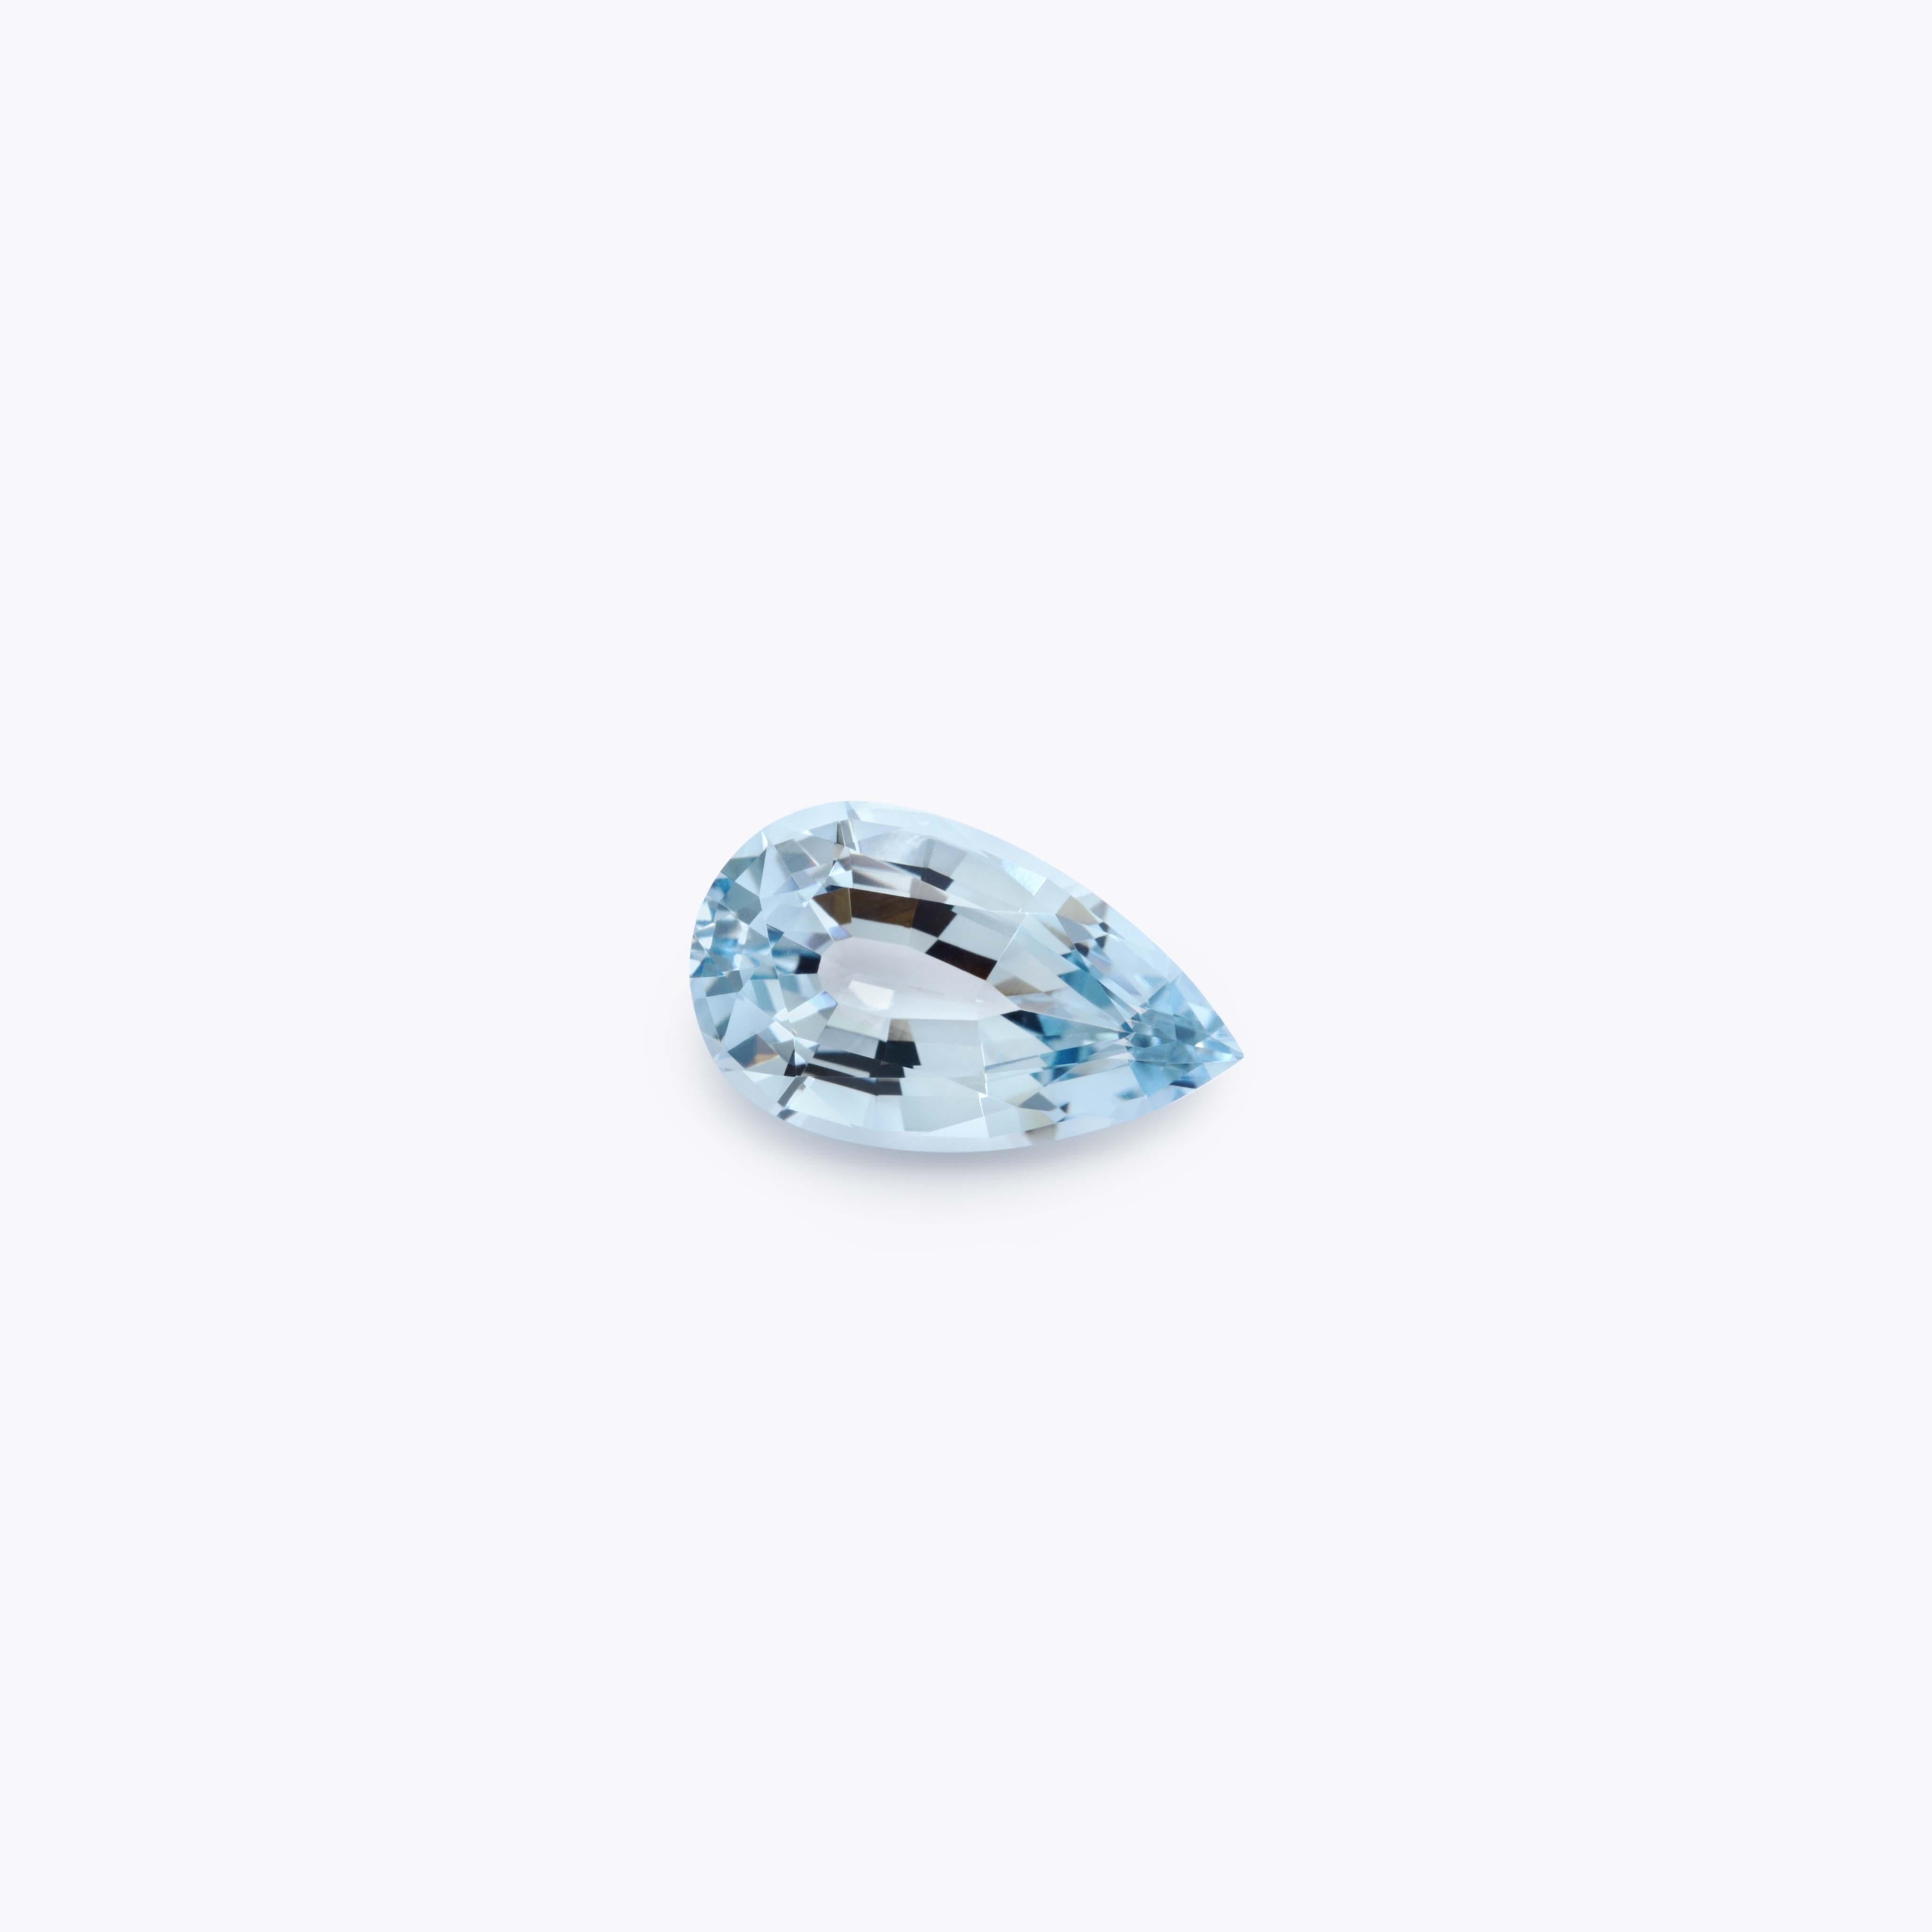 Pear Cut Aquamarine Gemstone Ring 4.60 Carat Loose Unmounted Pear Shape Gem For Sale